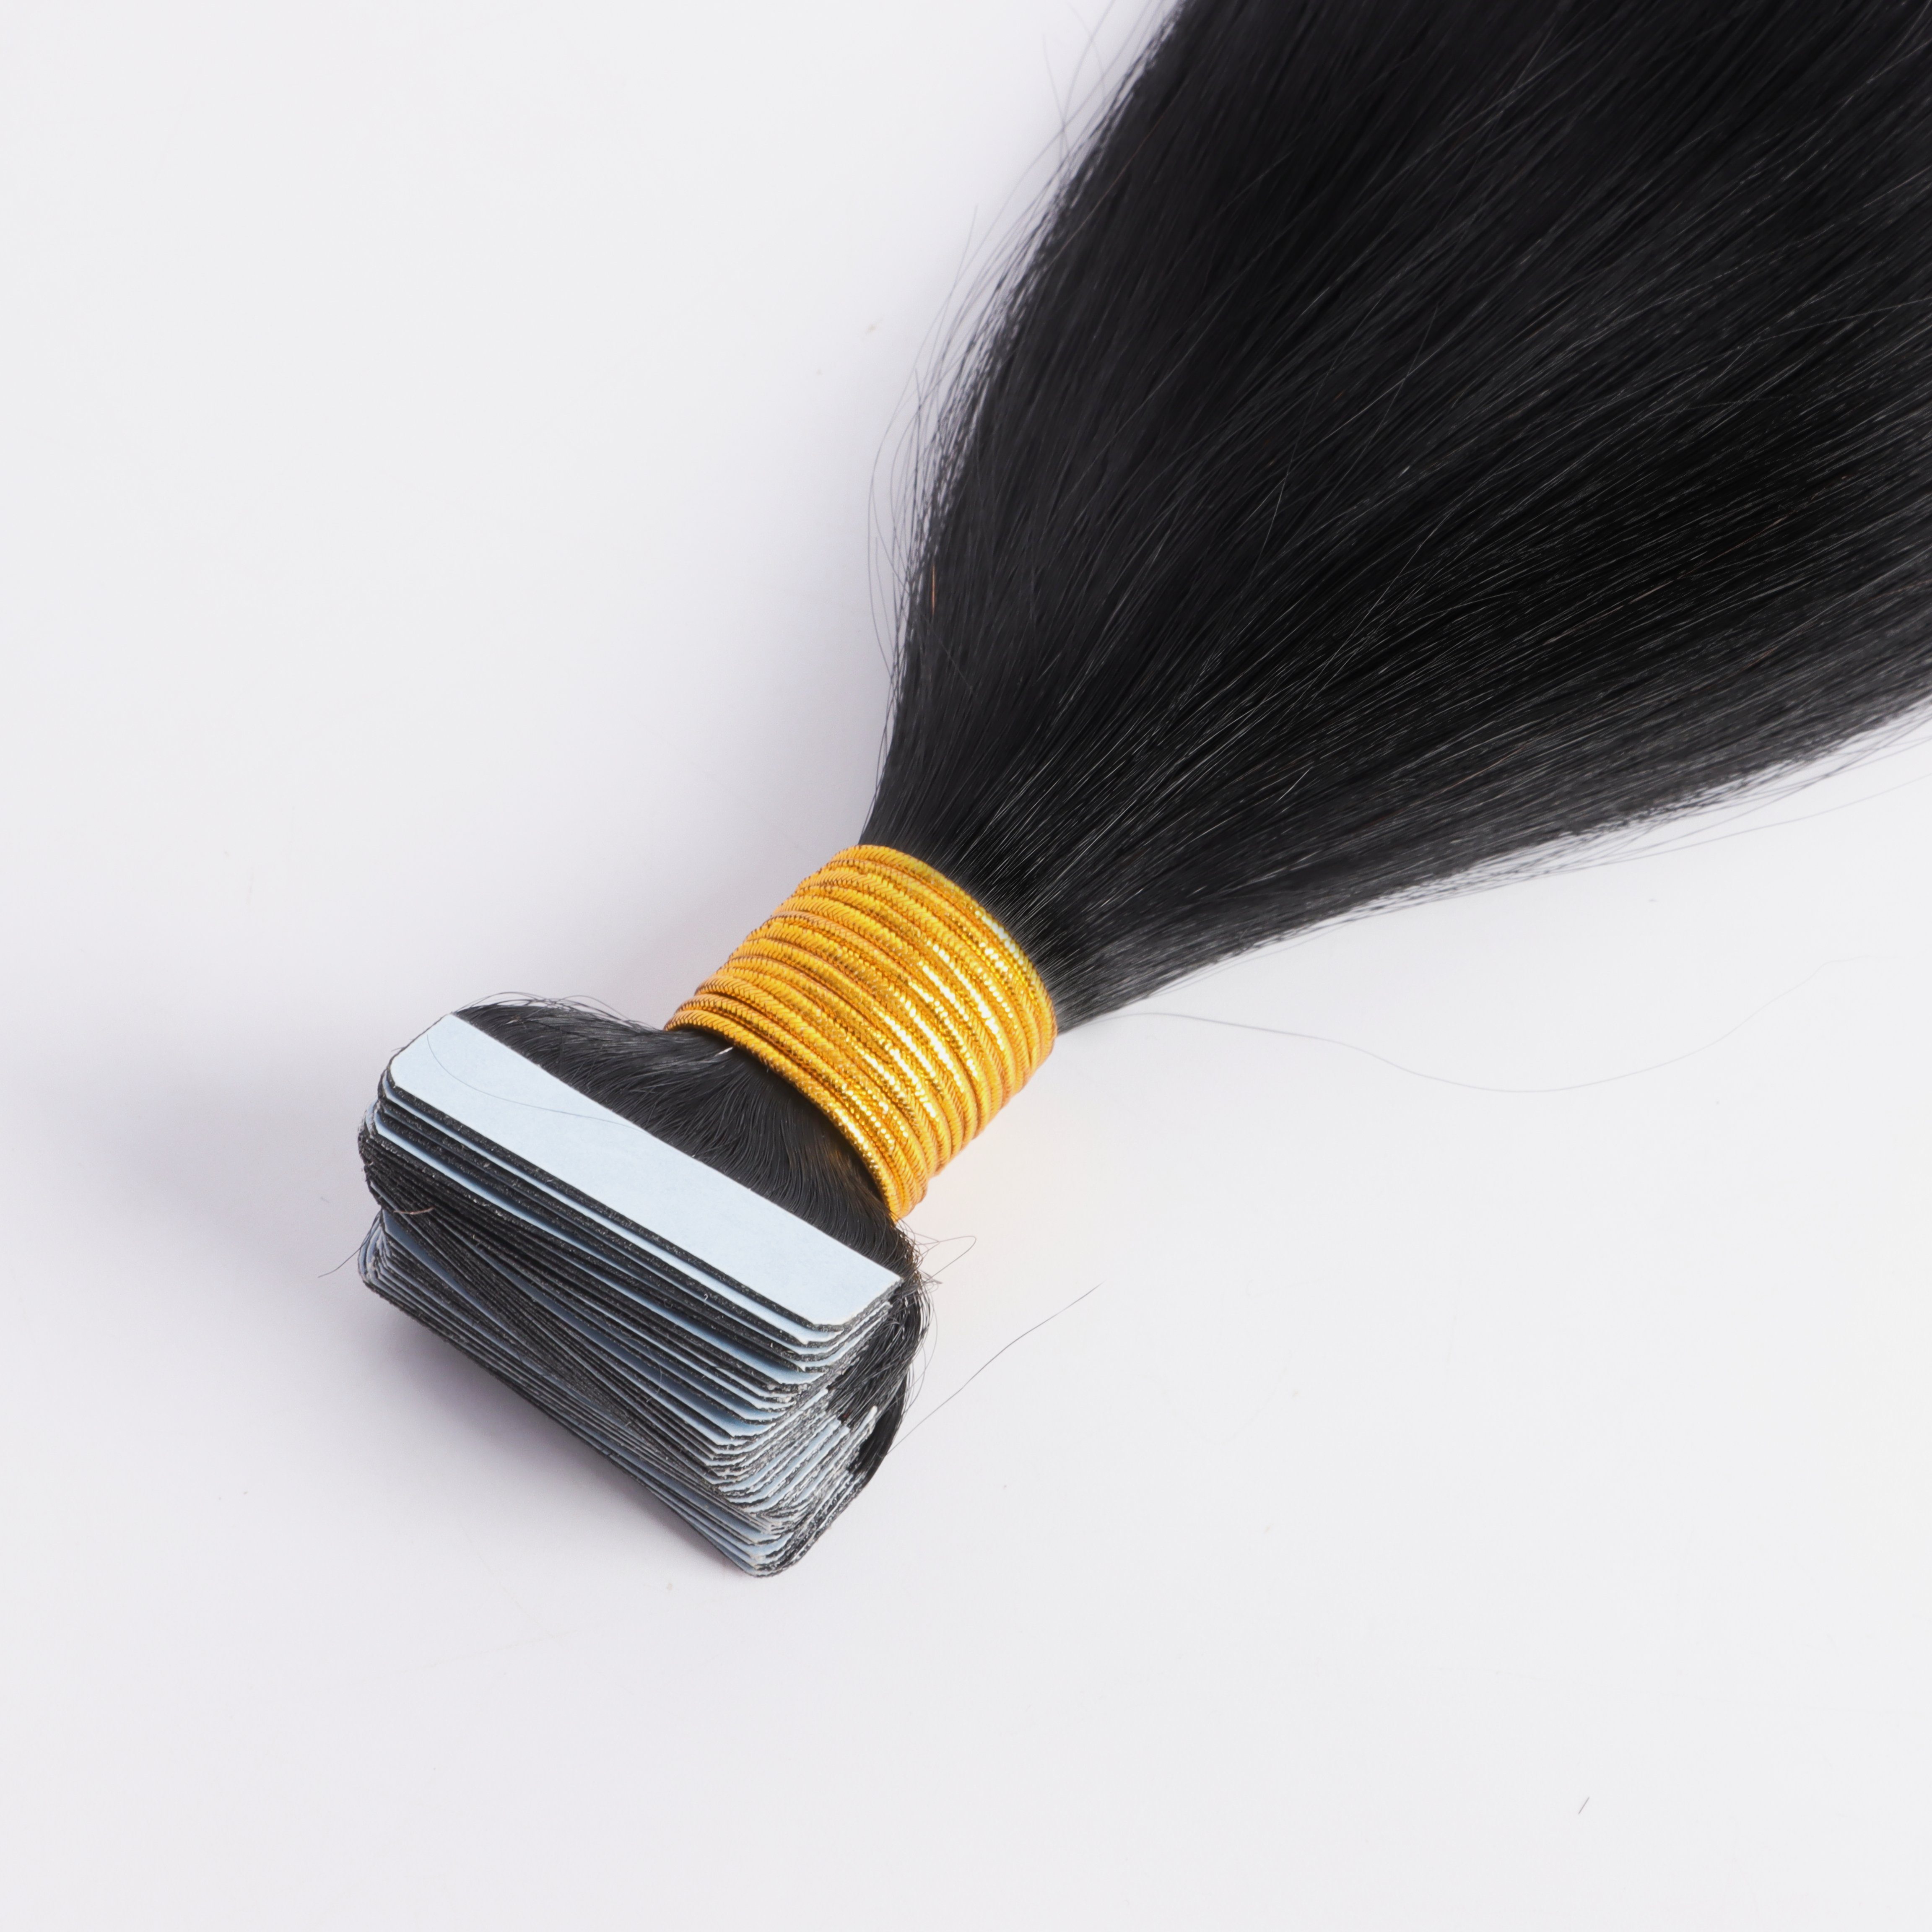 YC Fashion & Style Double 100 cm 25 Tape Remy Hair Drawn black-50 Echthaar % Menschenhaar #1jet On-Extension Skin-Wefts Echthaar-Extension gr